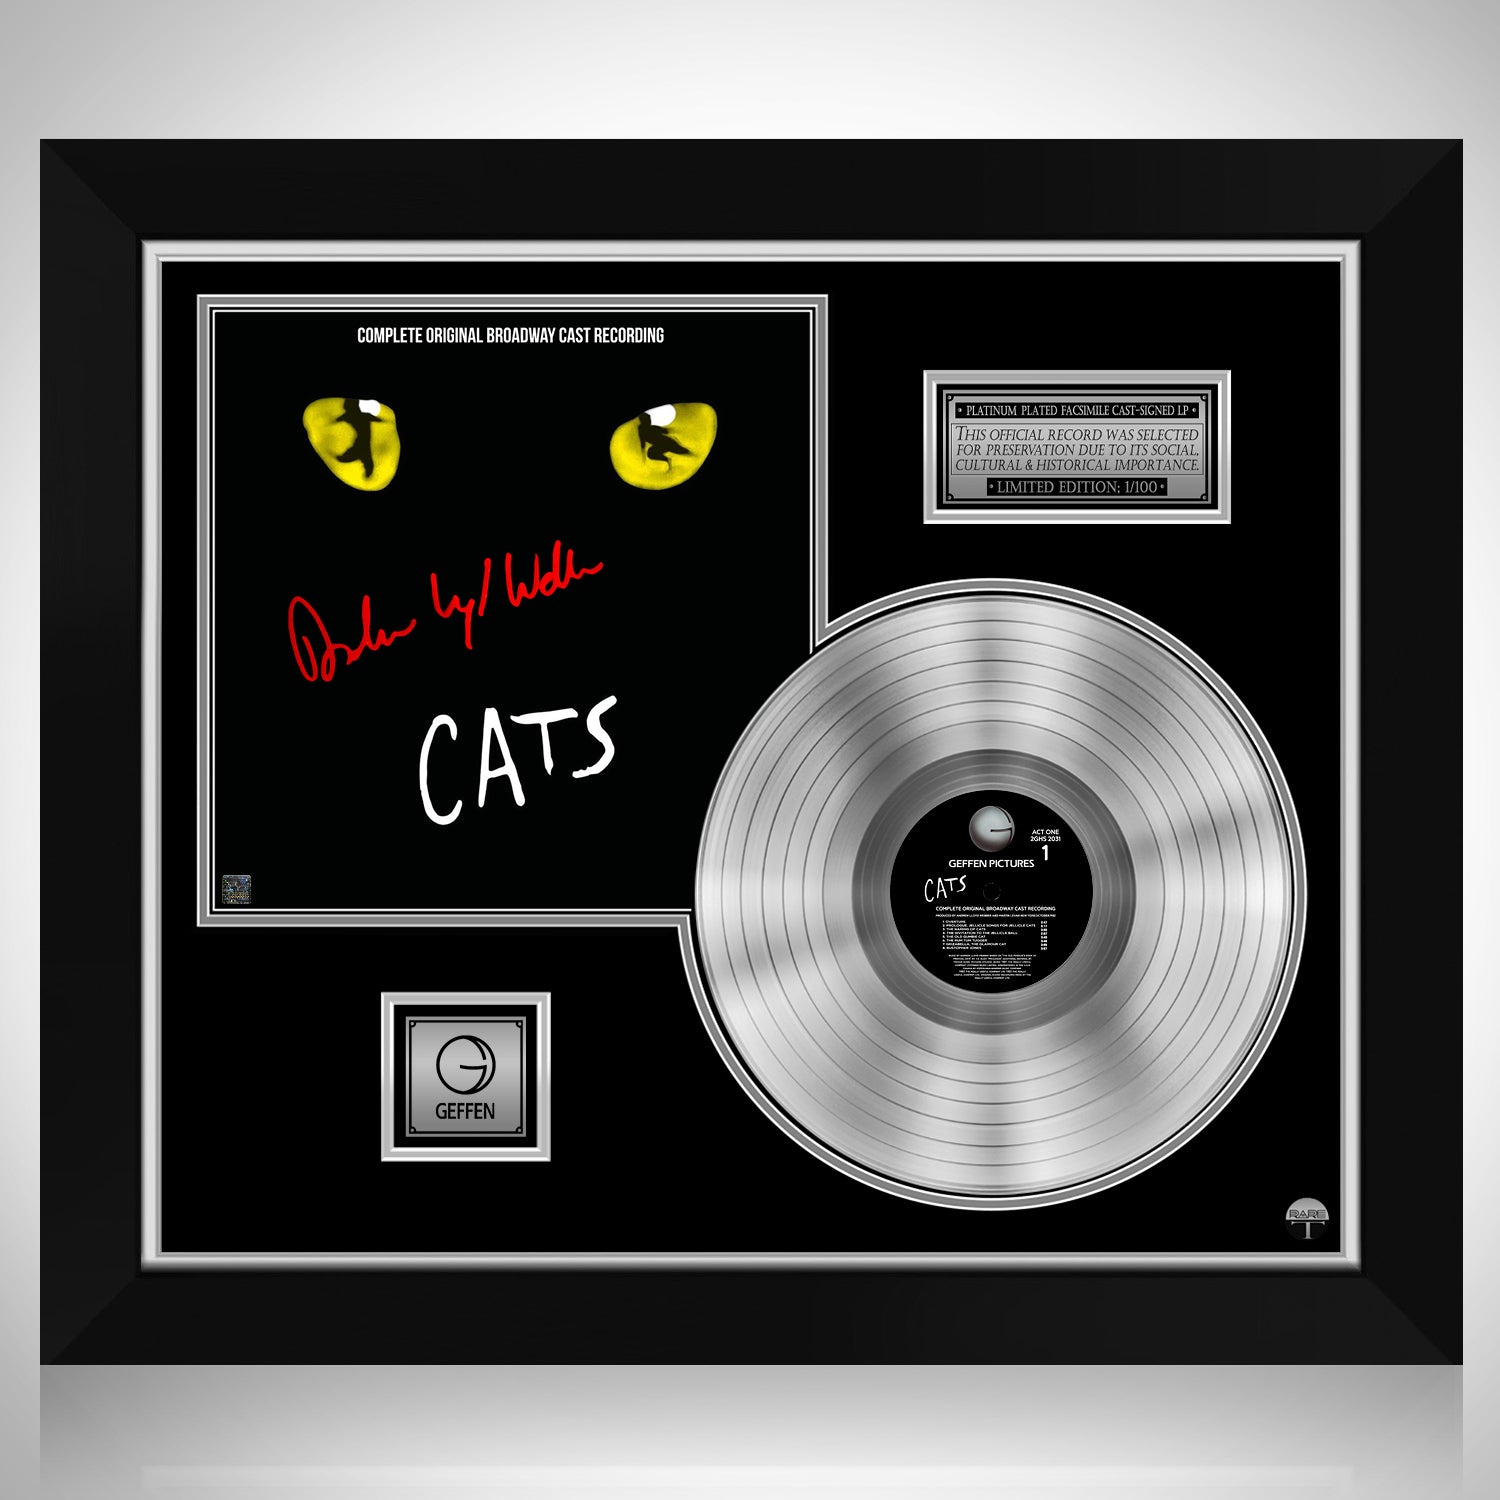 Cats Original Broadway Cast Recording Platinum Lp Limited Signature